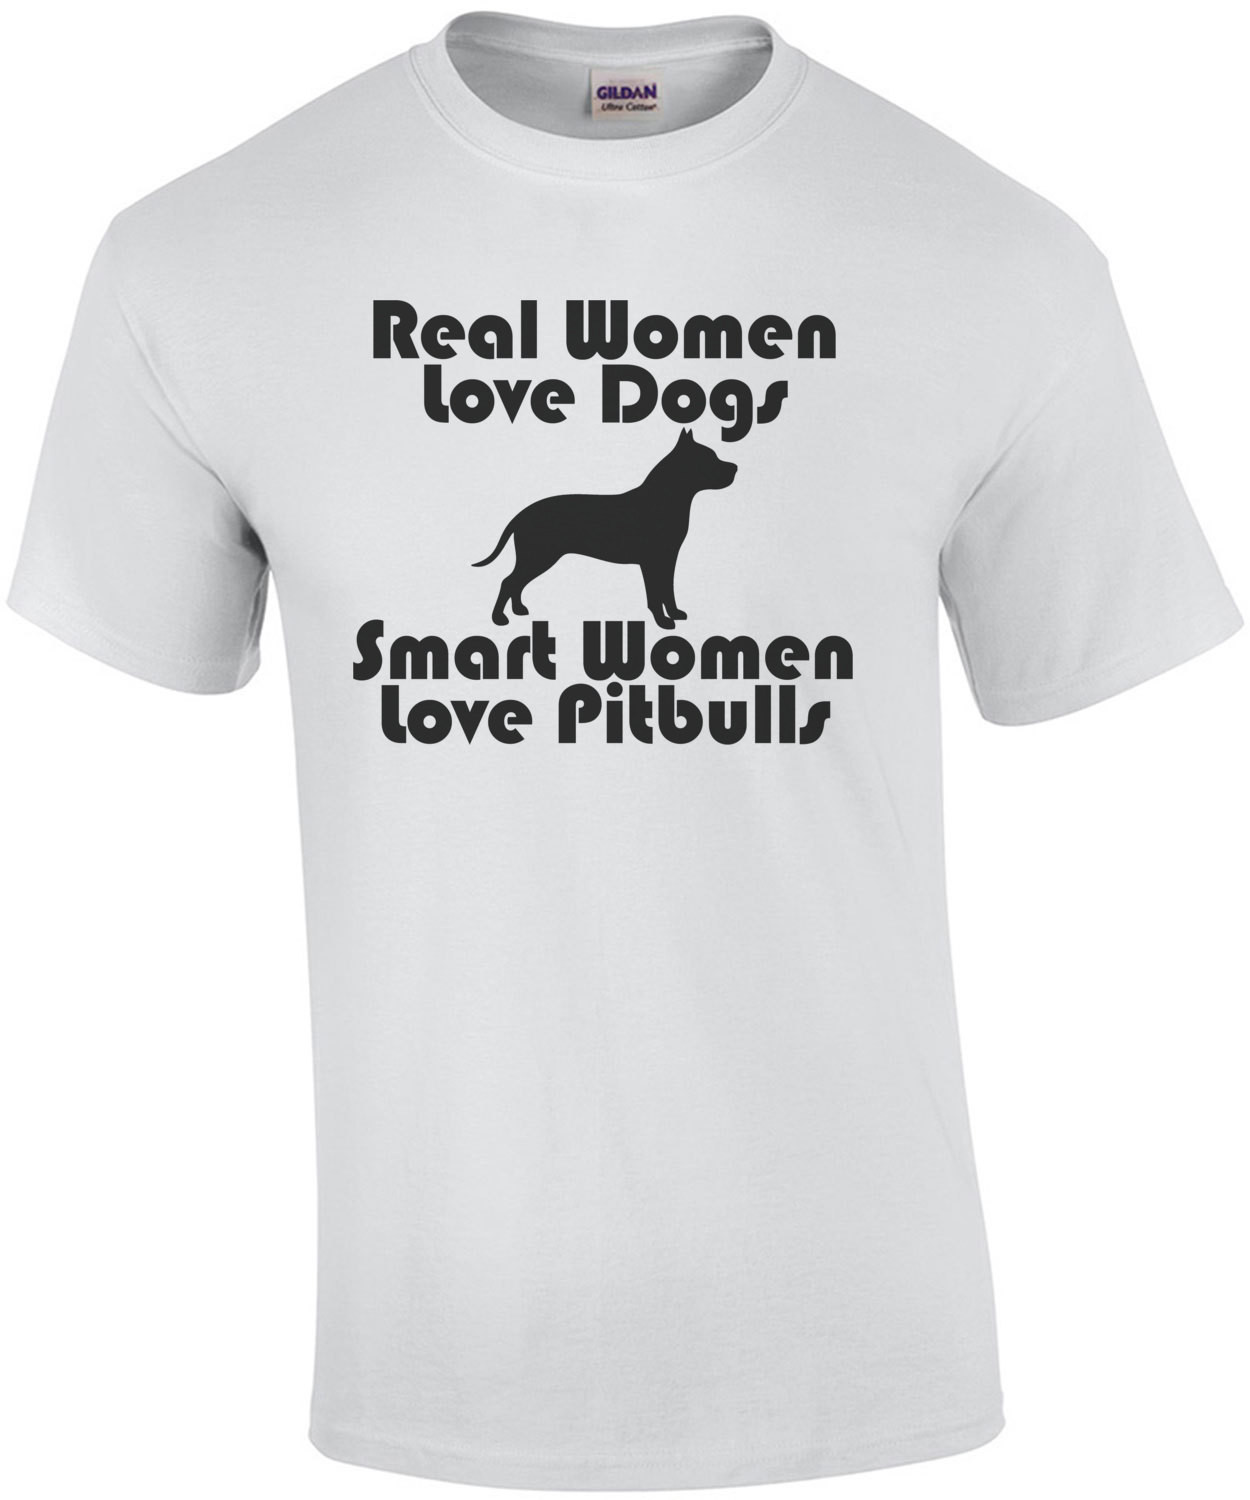 Real Women Love Dogs Smart Women Love Pitbulls T-Shirt